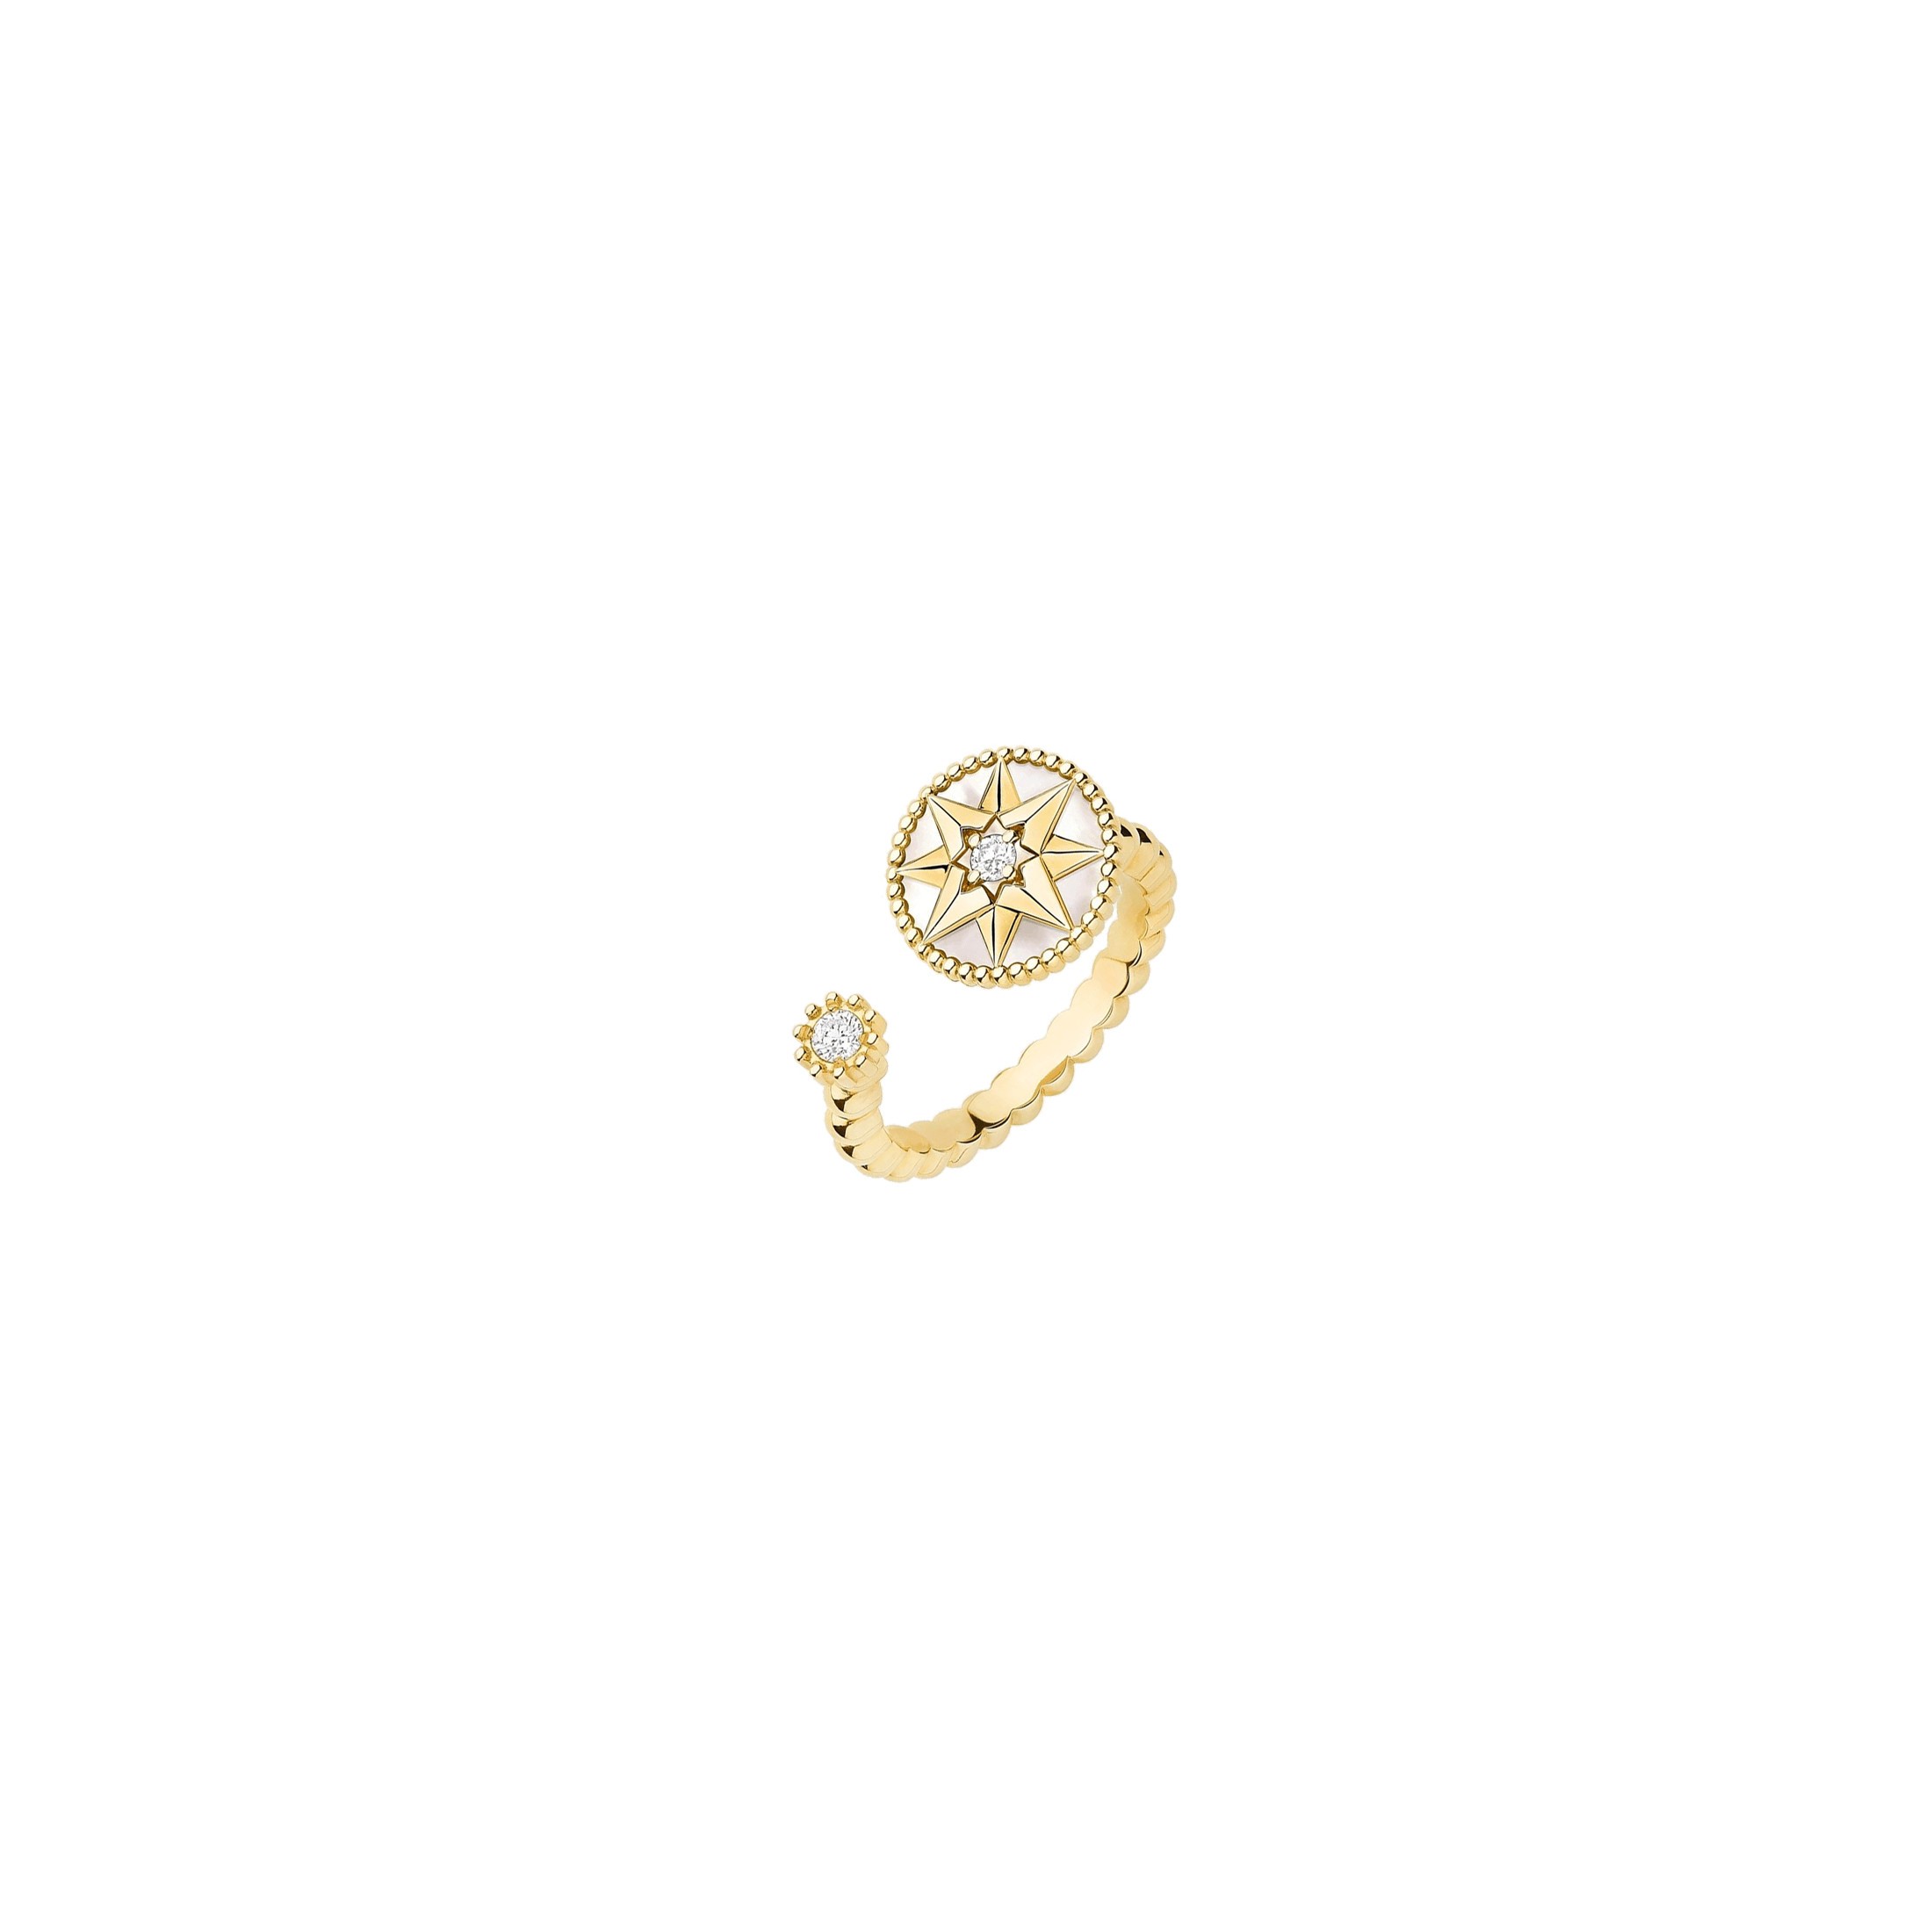 Rose des vents pink gold ring Dior Gold size 53 EU in Pink gold - 25180387